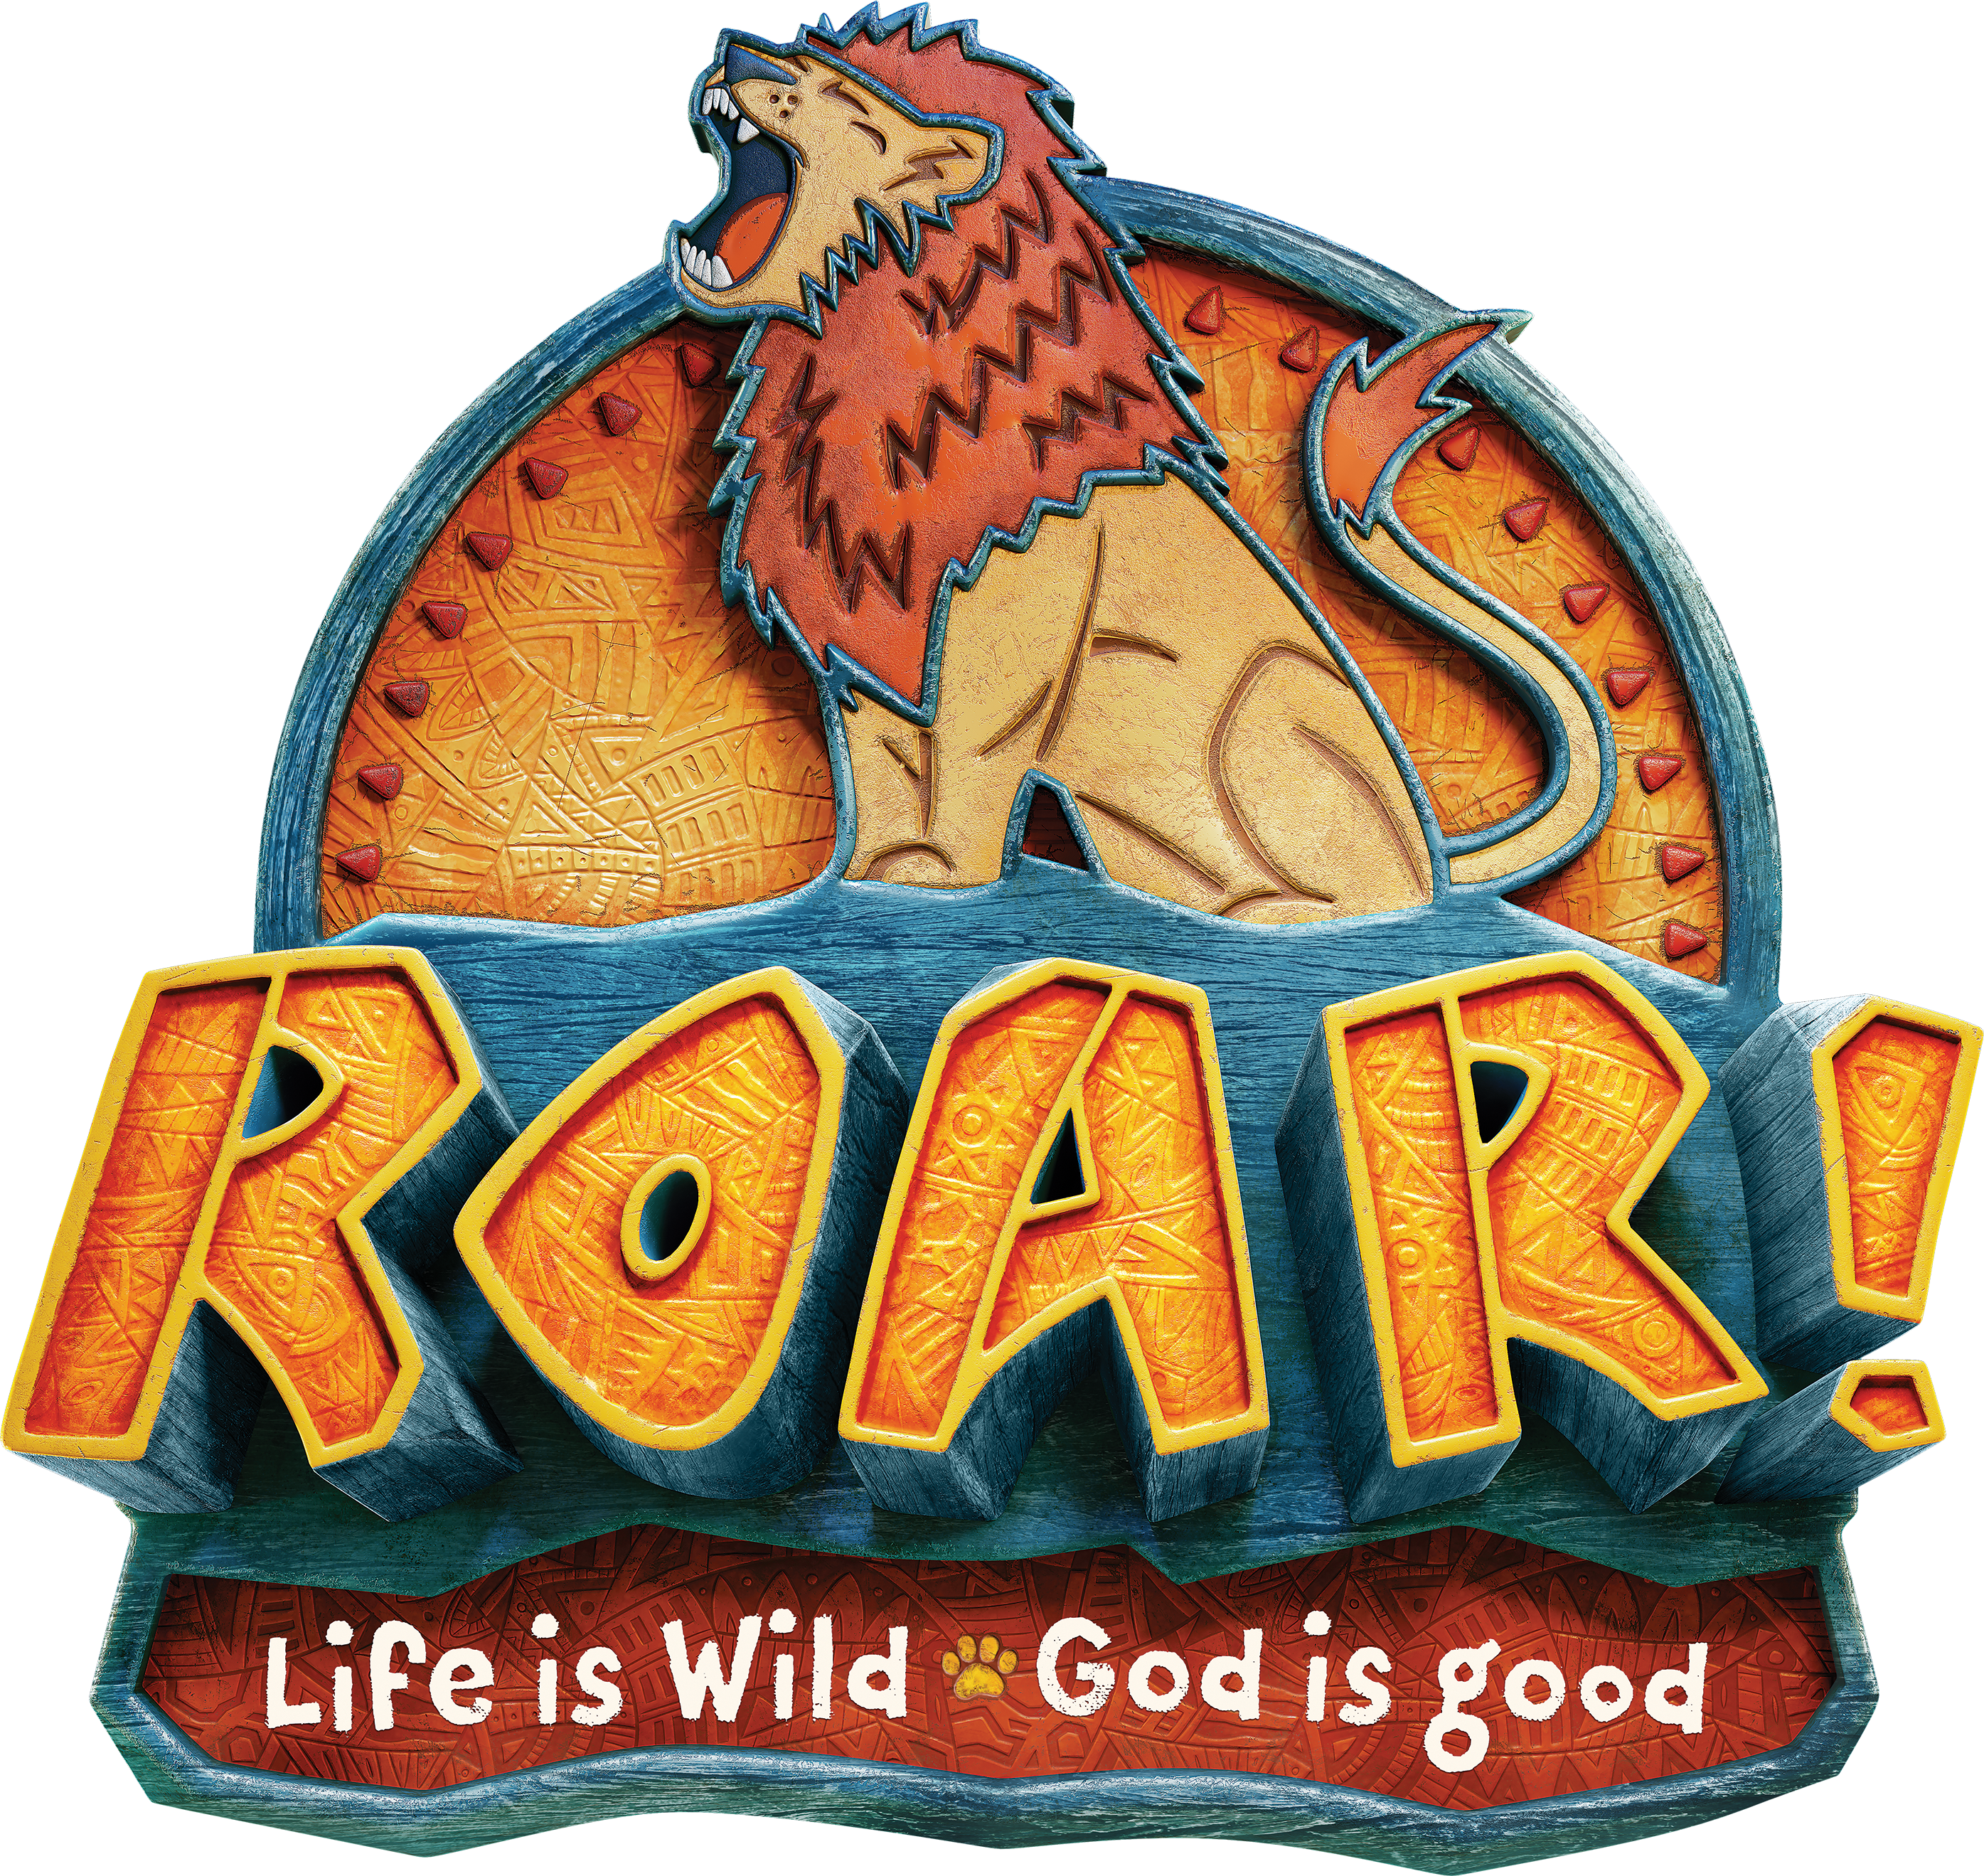 Download the Roar VBS logo pack here! #roarvbs #groupvbs #roarlogo